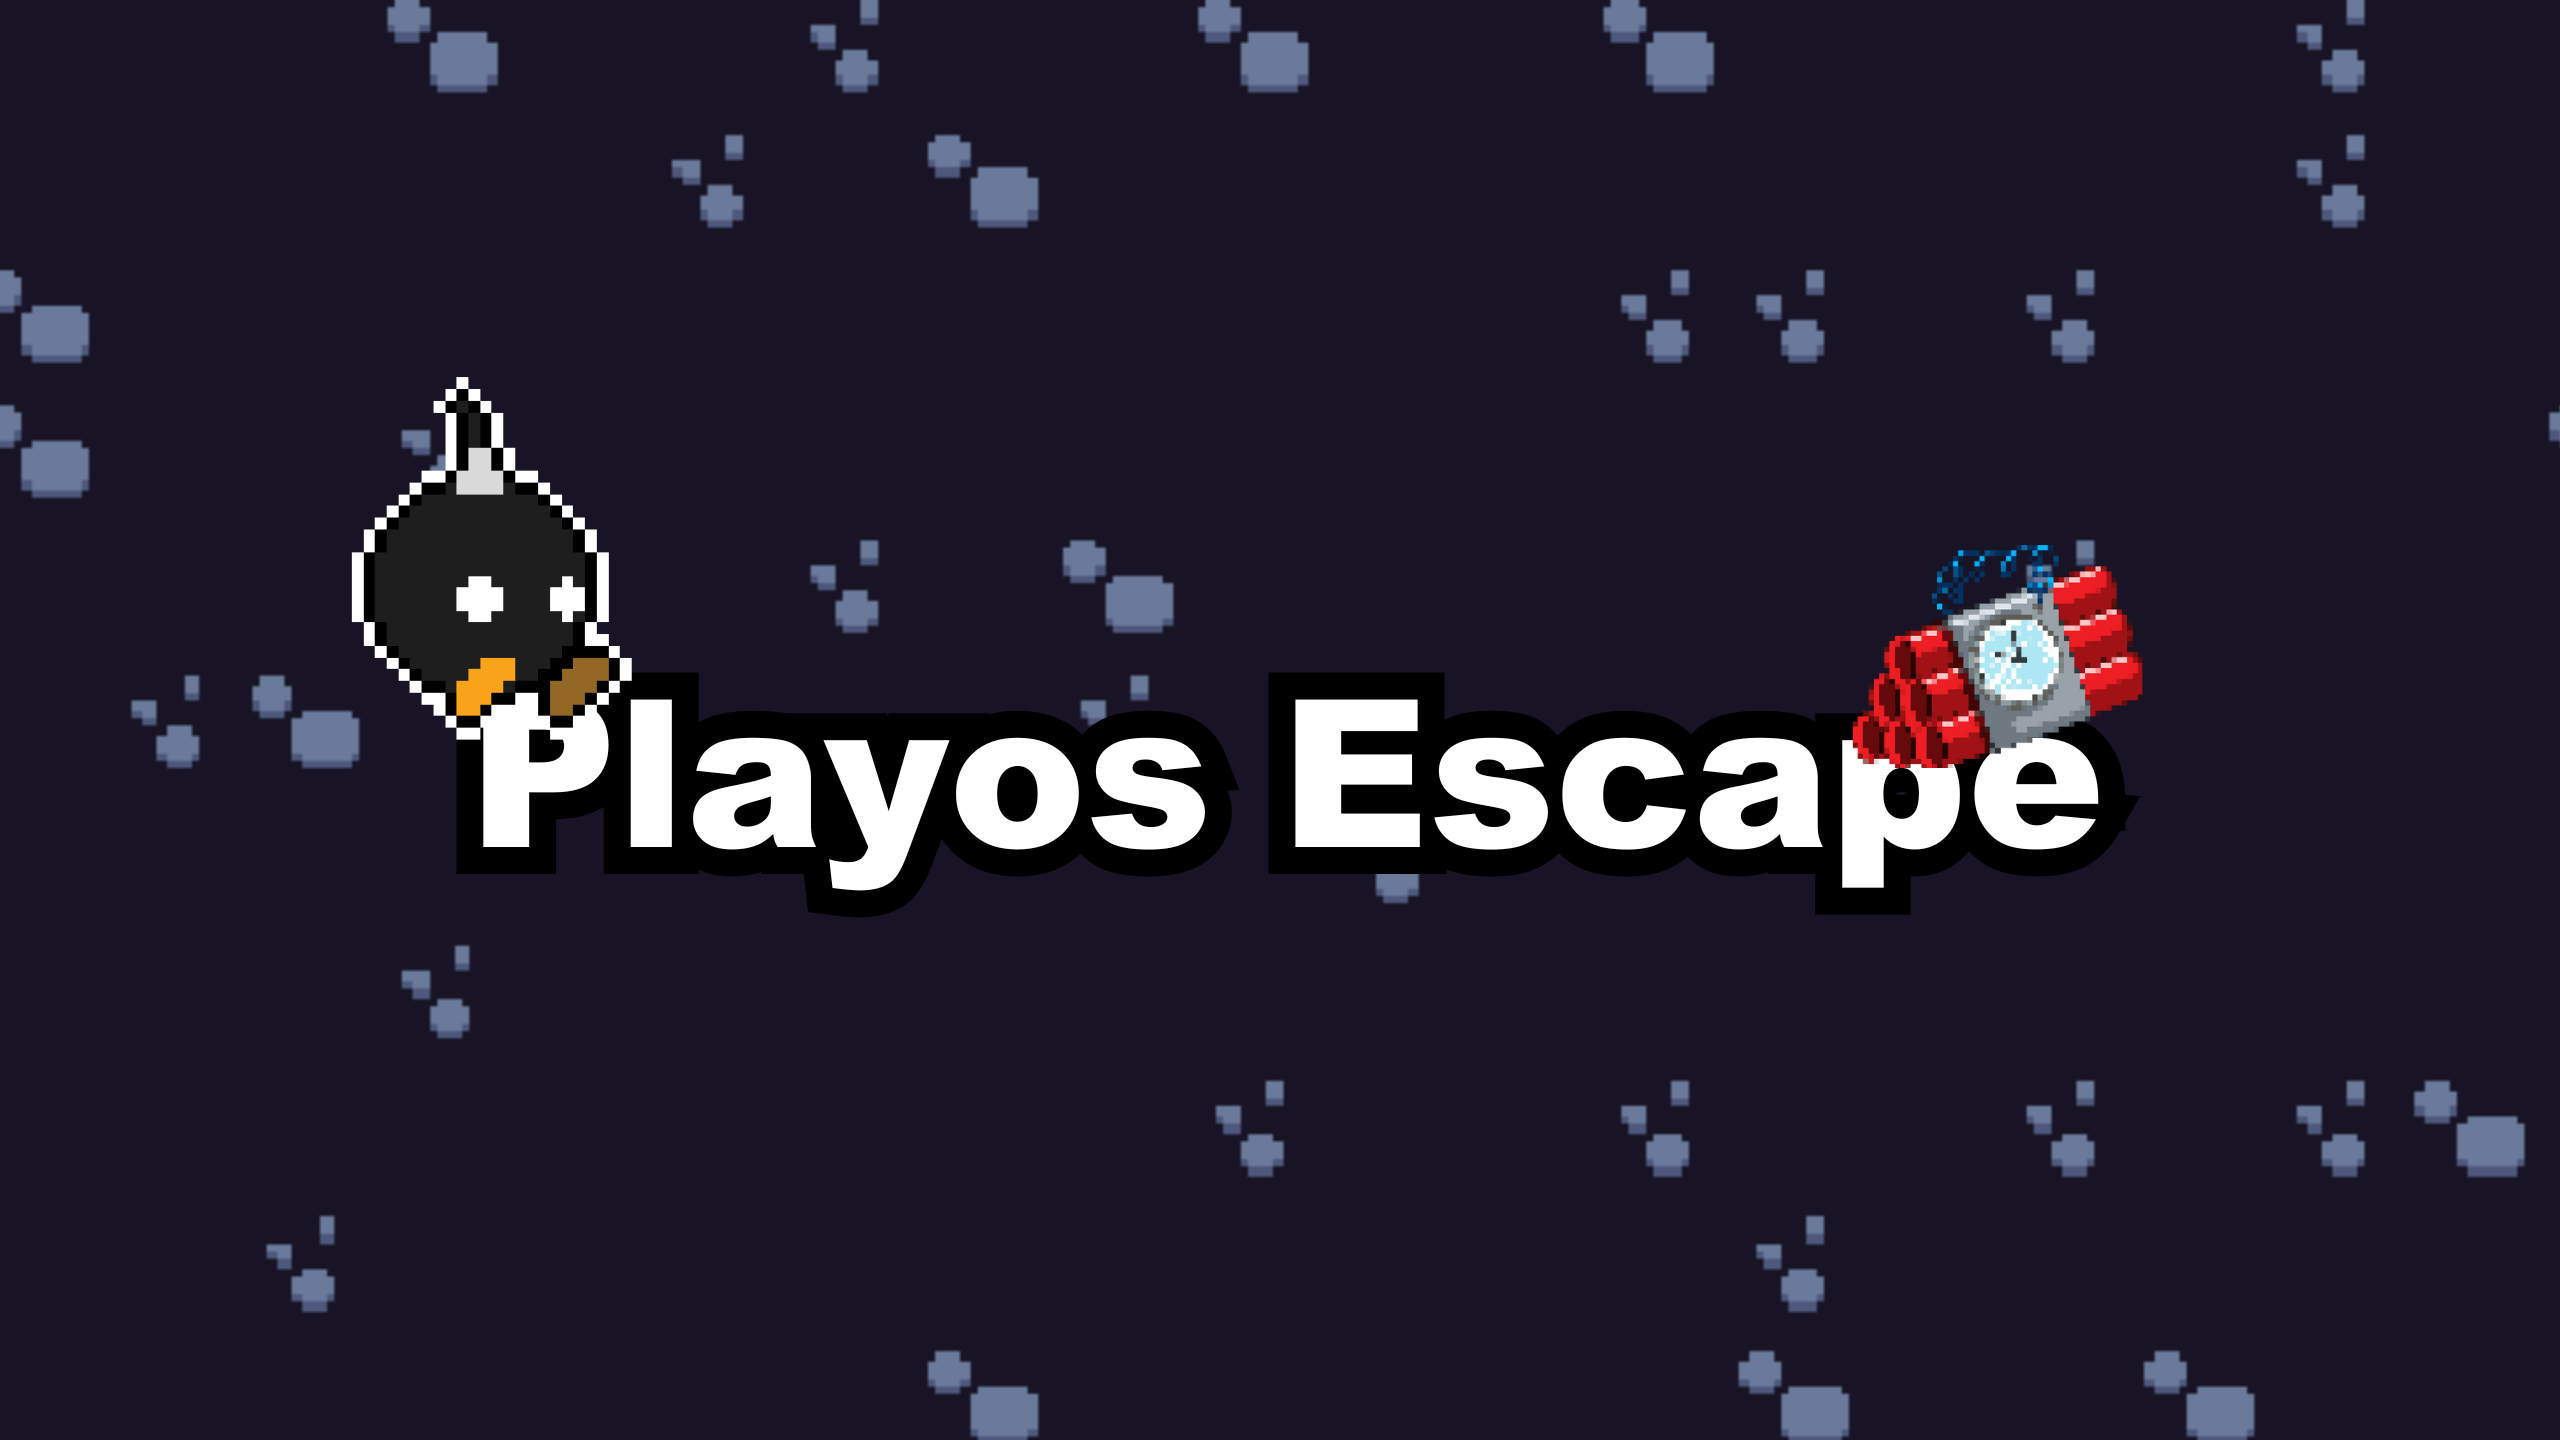 Playos Escape